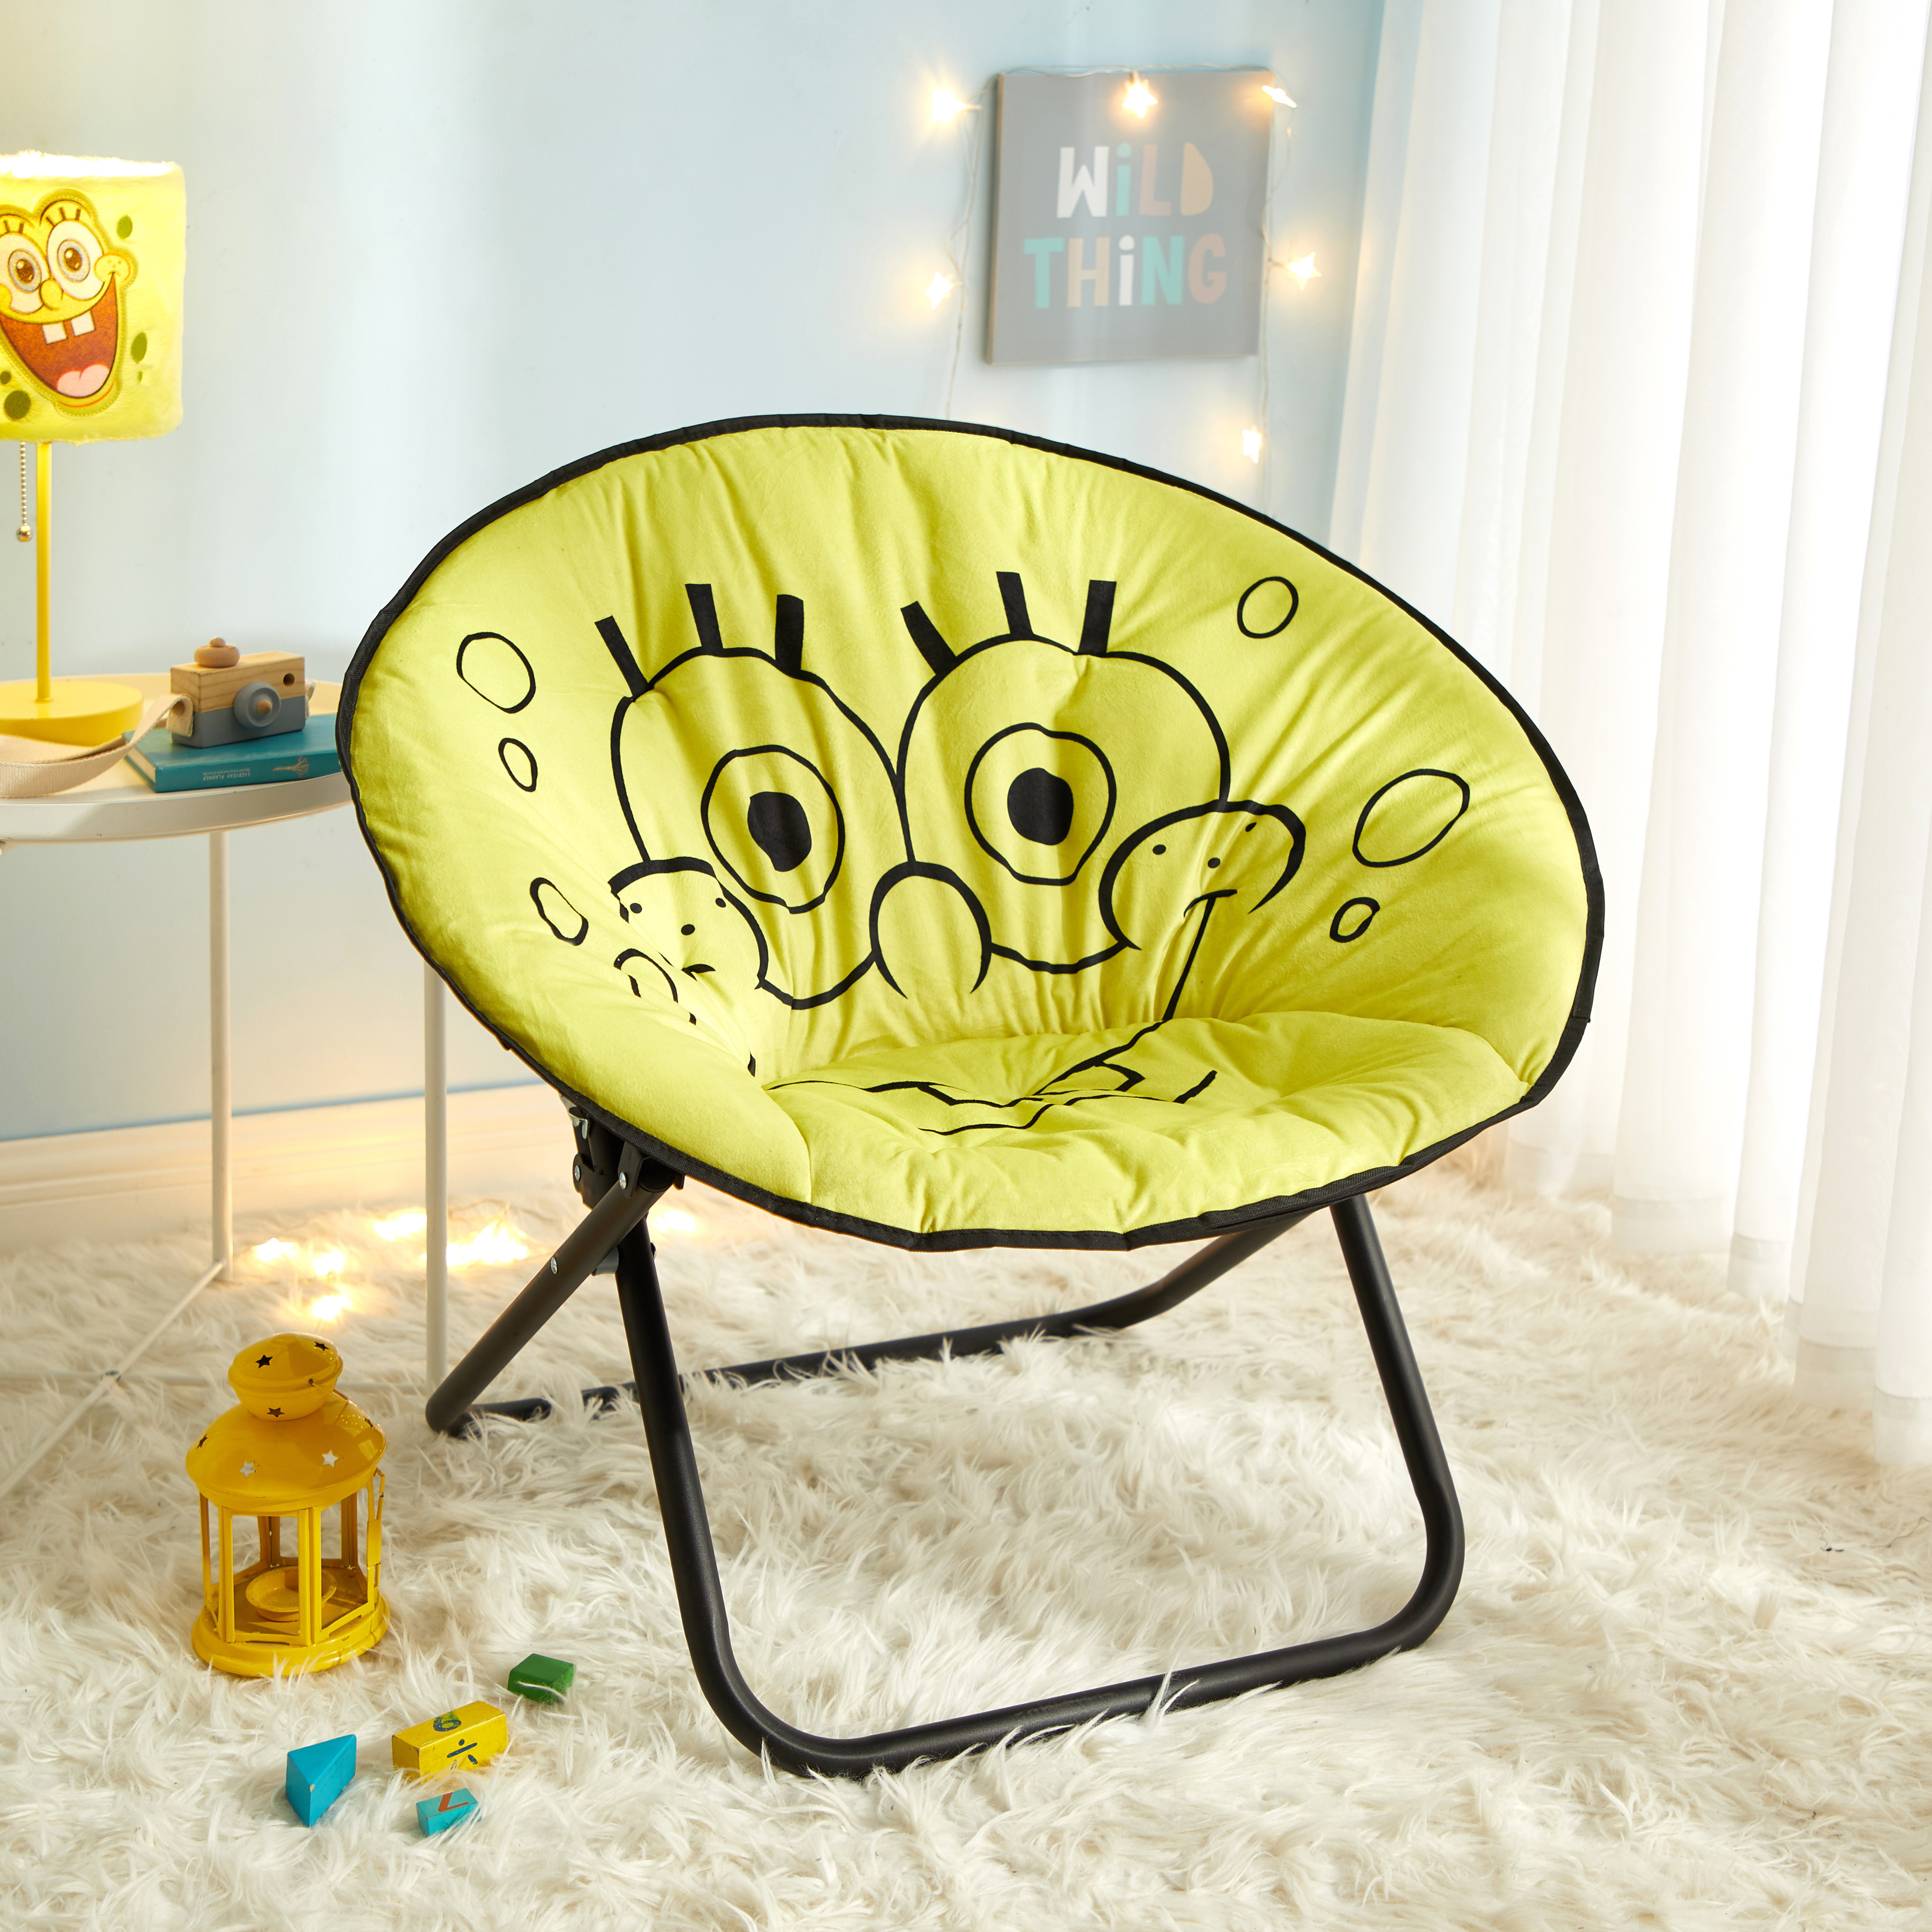 Nickelodeon Spongebob Squarepants 30" Oversized Folding Saucer Chair, Yellow - image 1 of 6